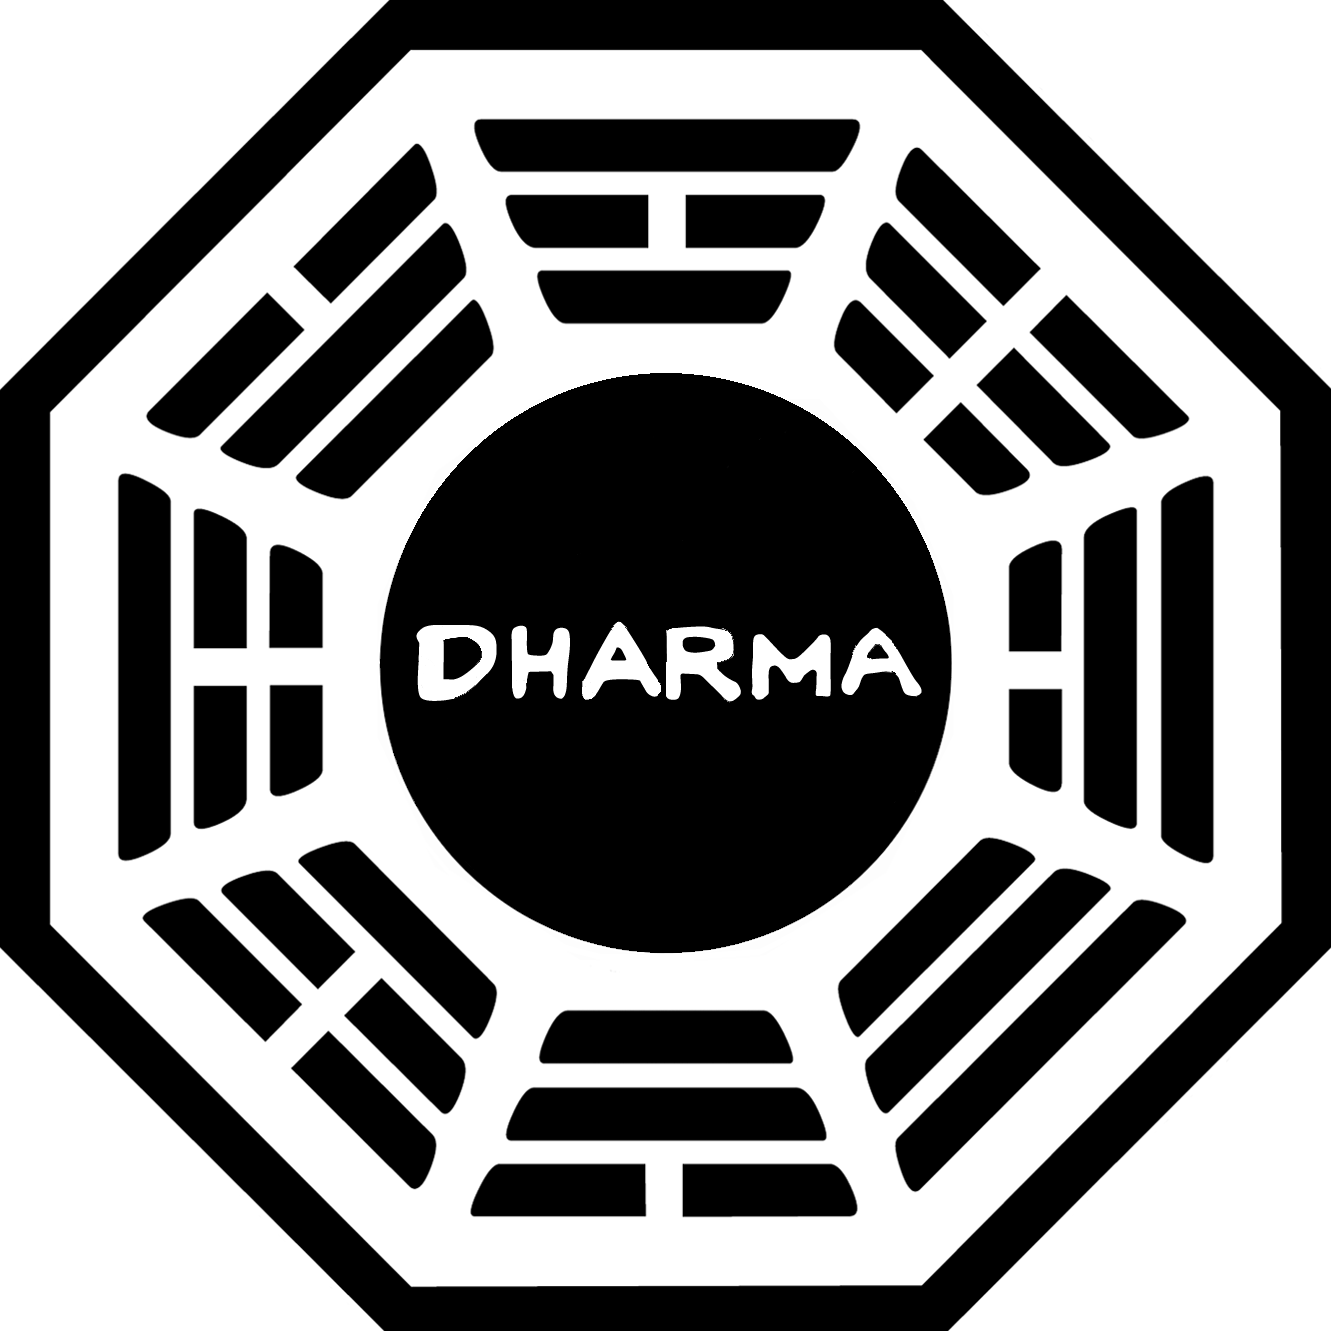 Dharma Logo - Dharma Initiative logo.png